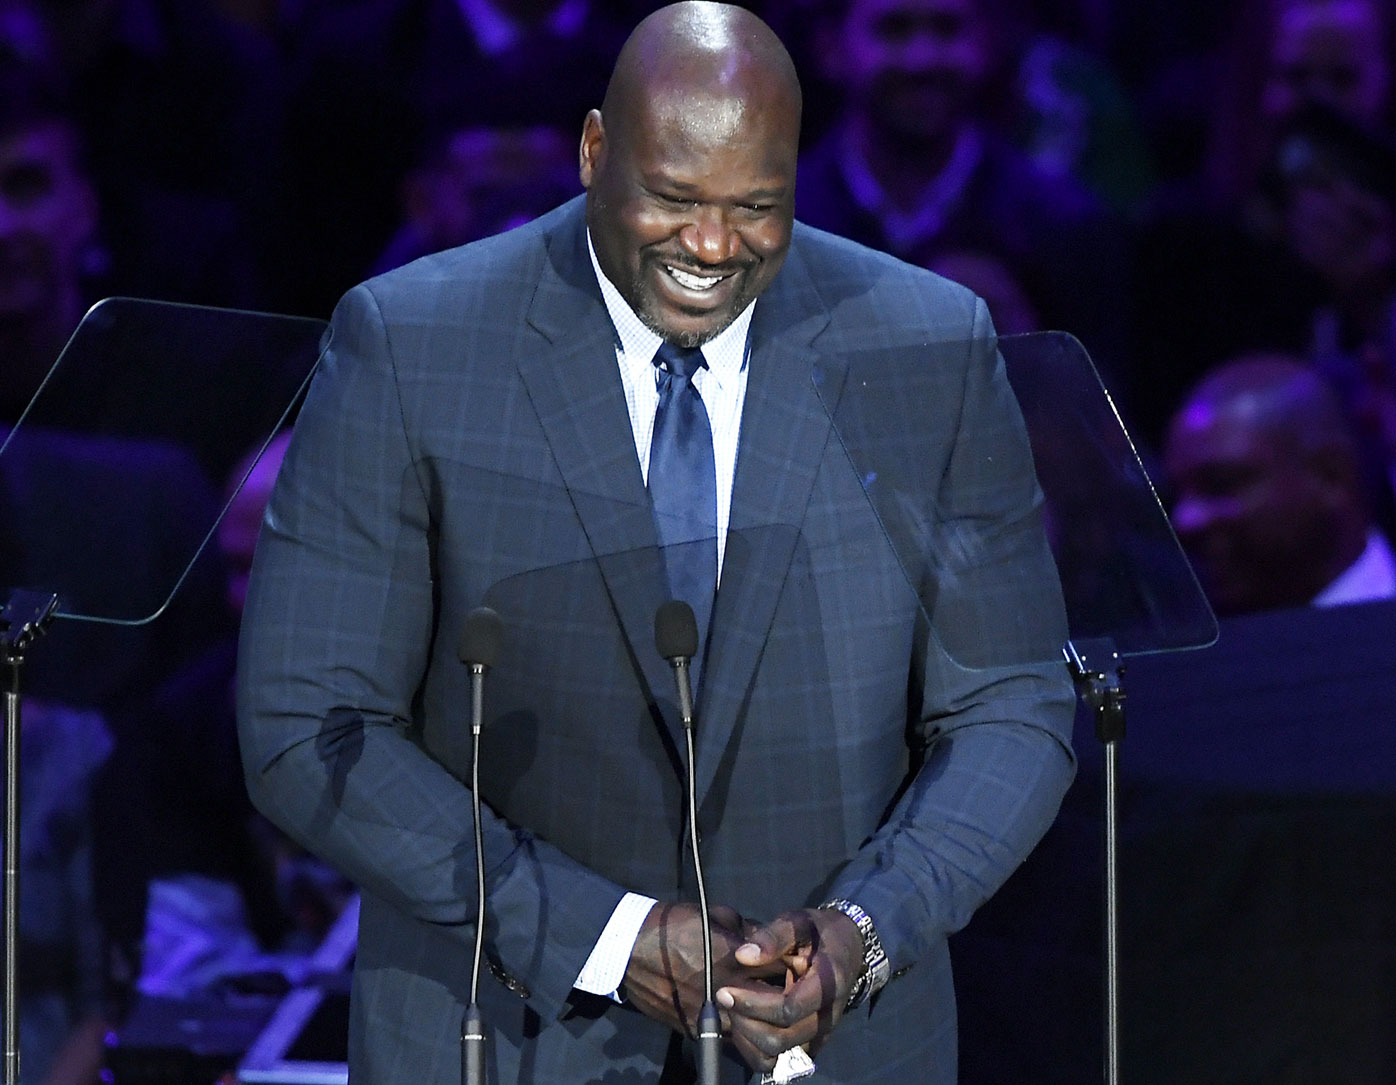 Watch Michael Jordan's speech at Kobe Bryant's memorial service